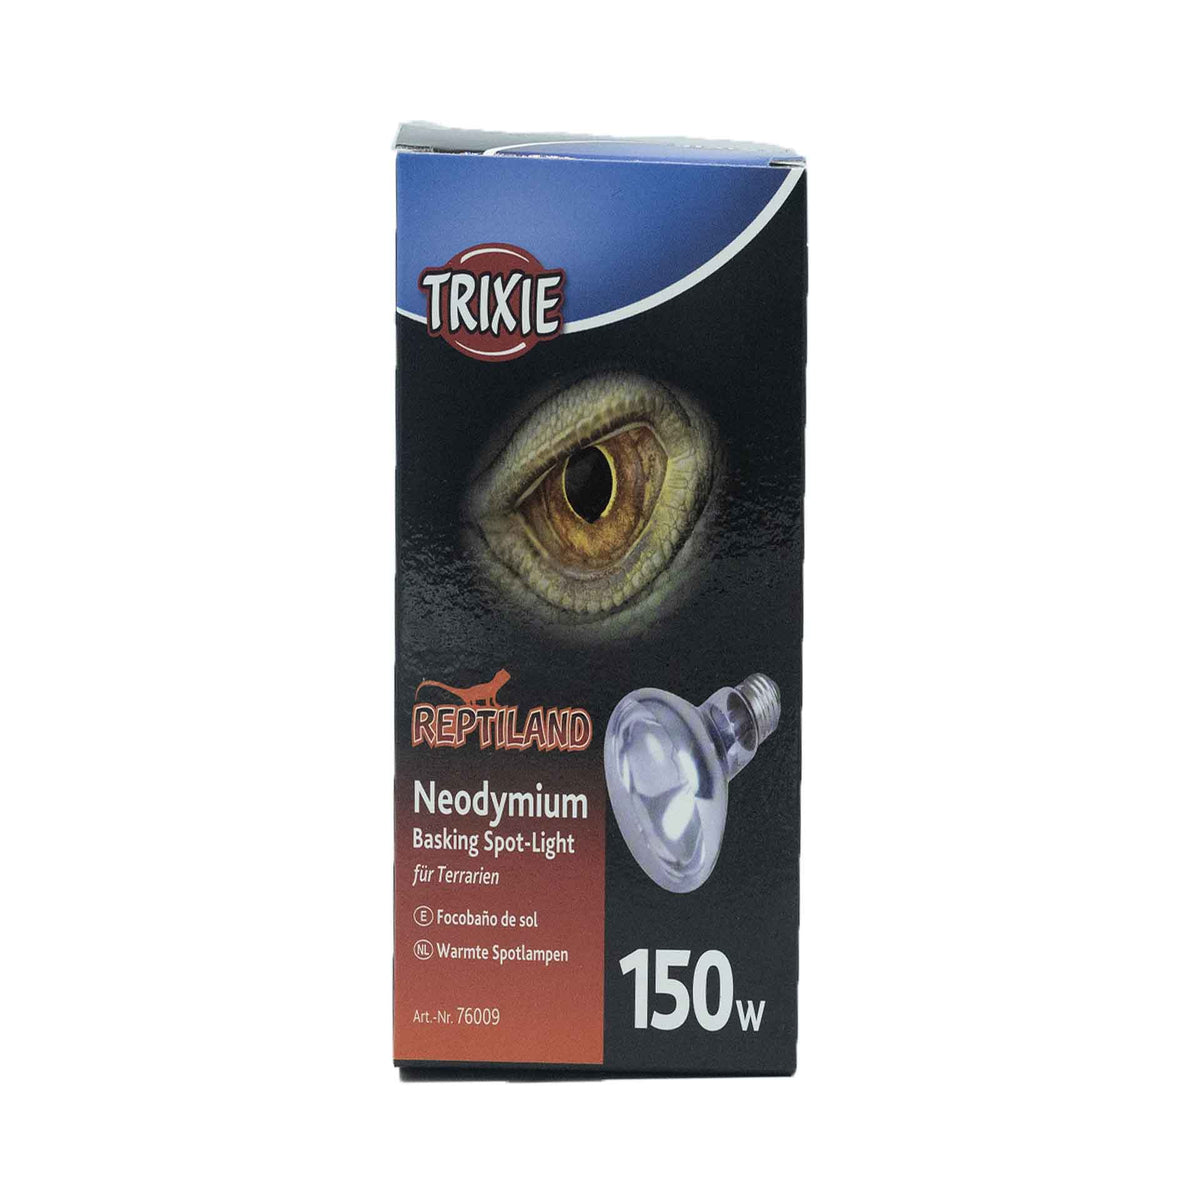 Trixie Neodymium Basking Spot-Light 150w